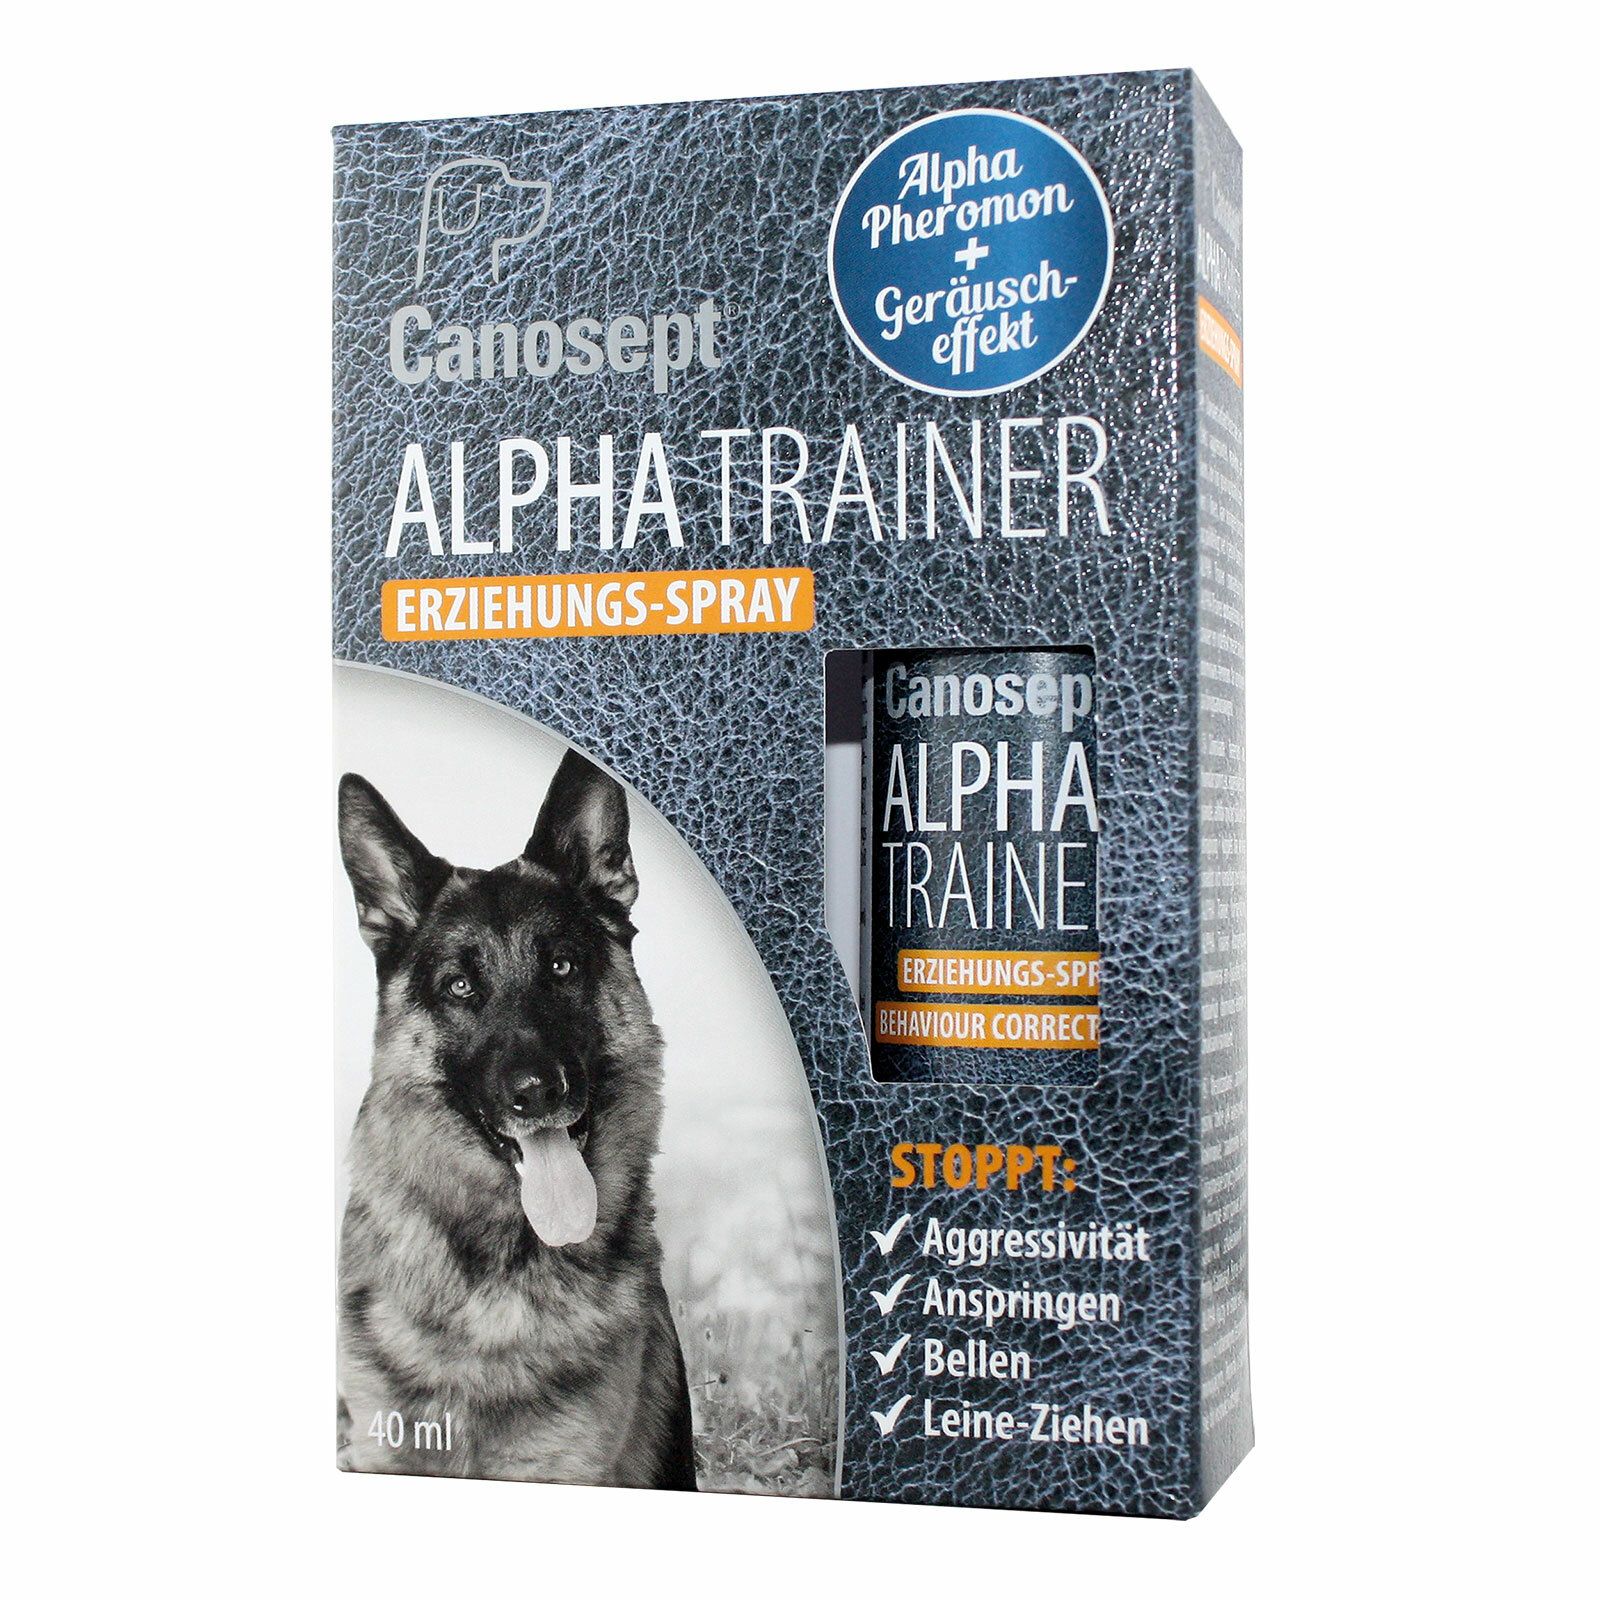 Canosept® Alpha Trainer Erziehungsspray für Hunde 40 ml - shop